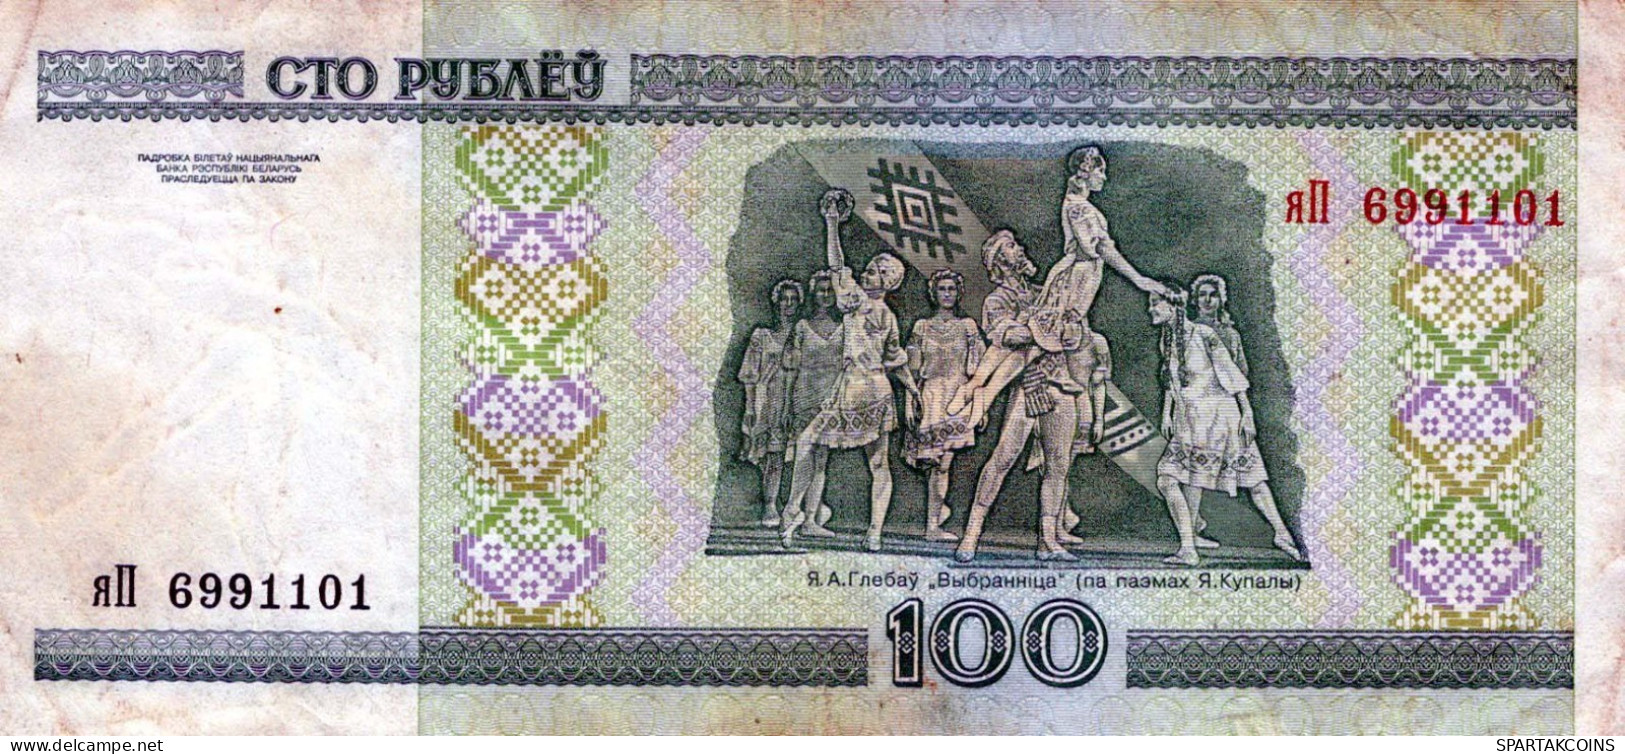 100 RUBLES 2000 BELARUS Papiergeld Banknote #PK613 - [11] Local Banknote Issues